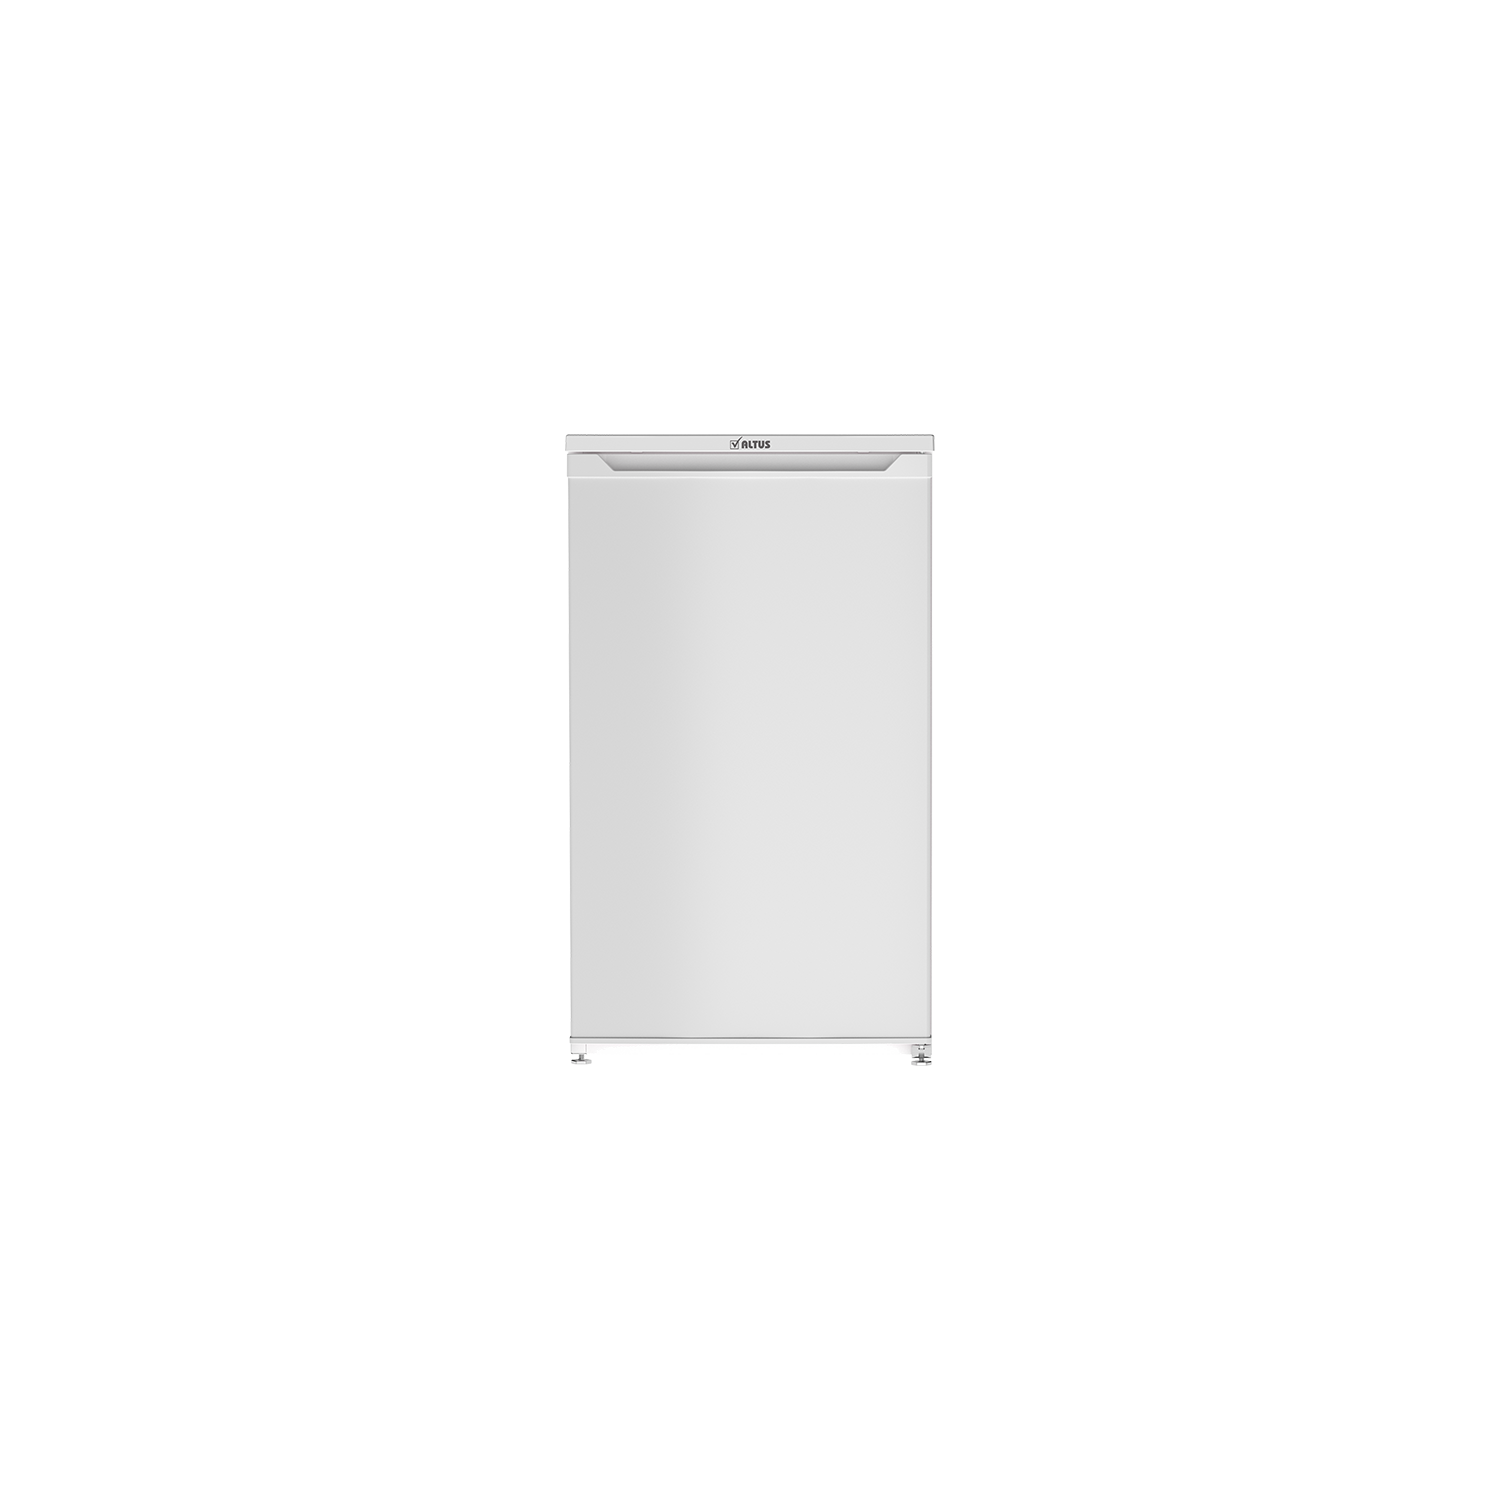 ALTUS AL 305 B Mini Buzdolabı